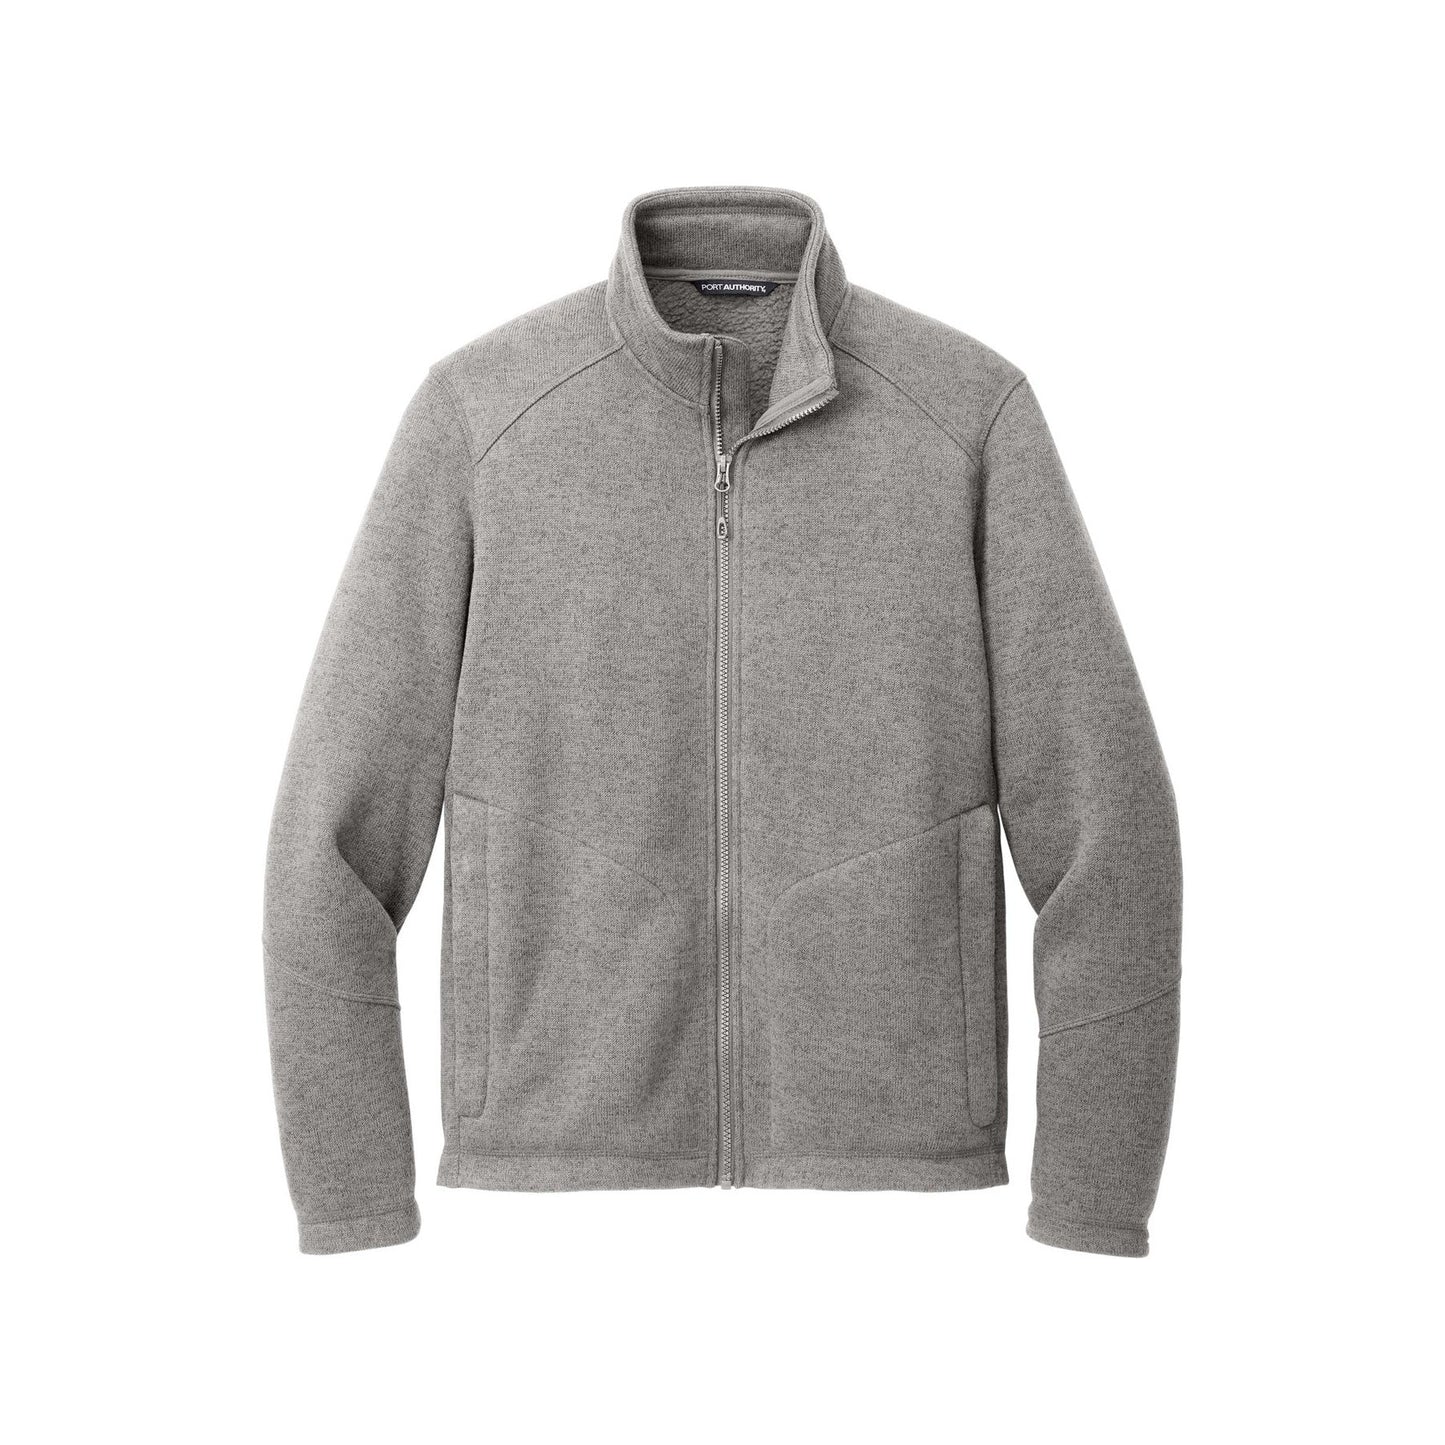 Port Authority Arc Sweater Fleece Jacket